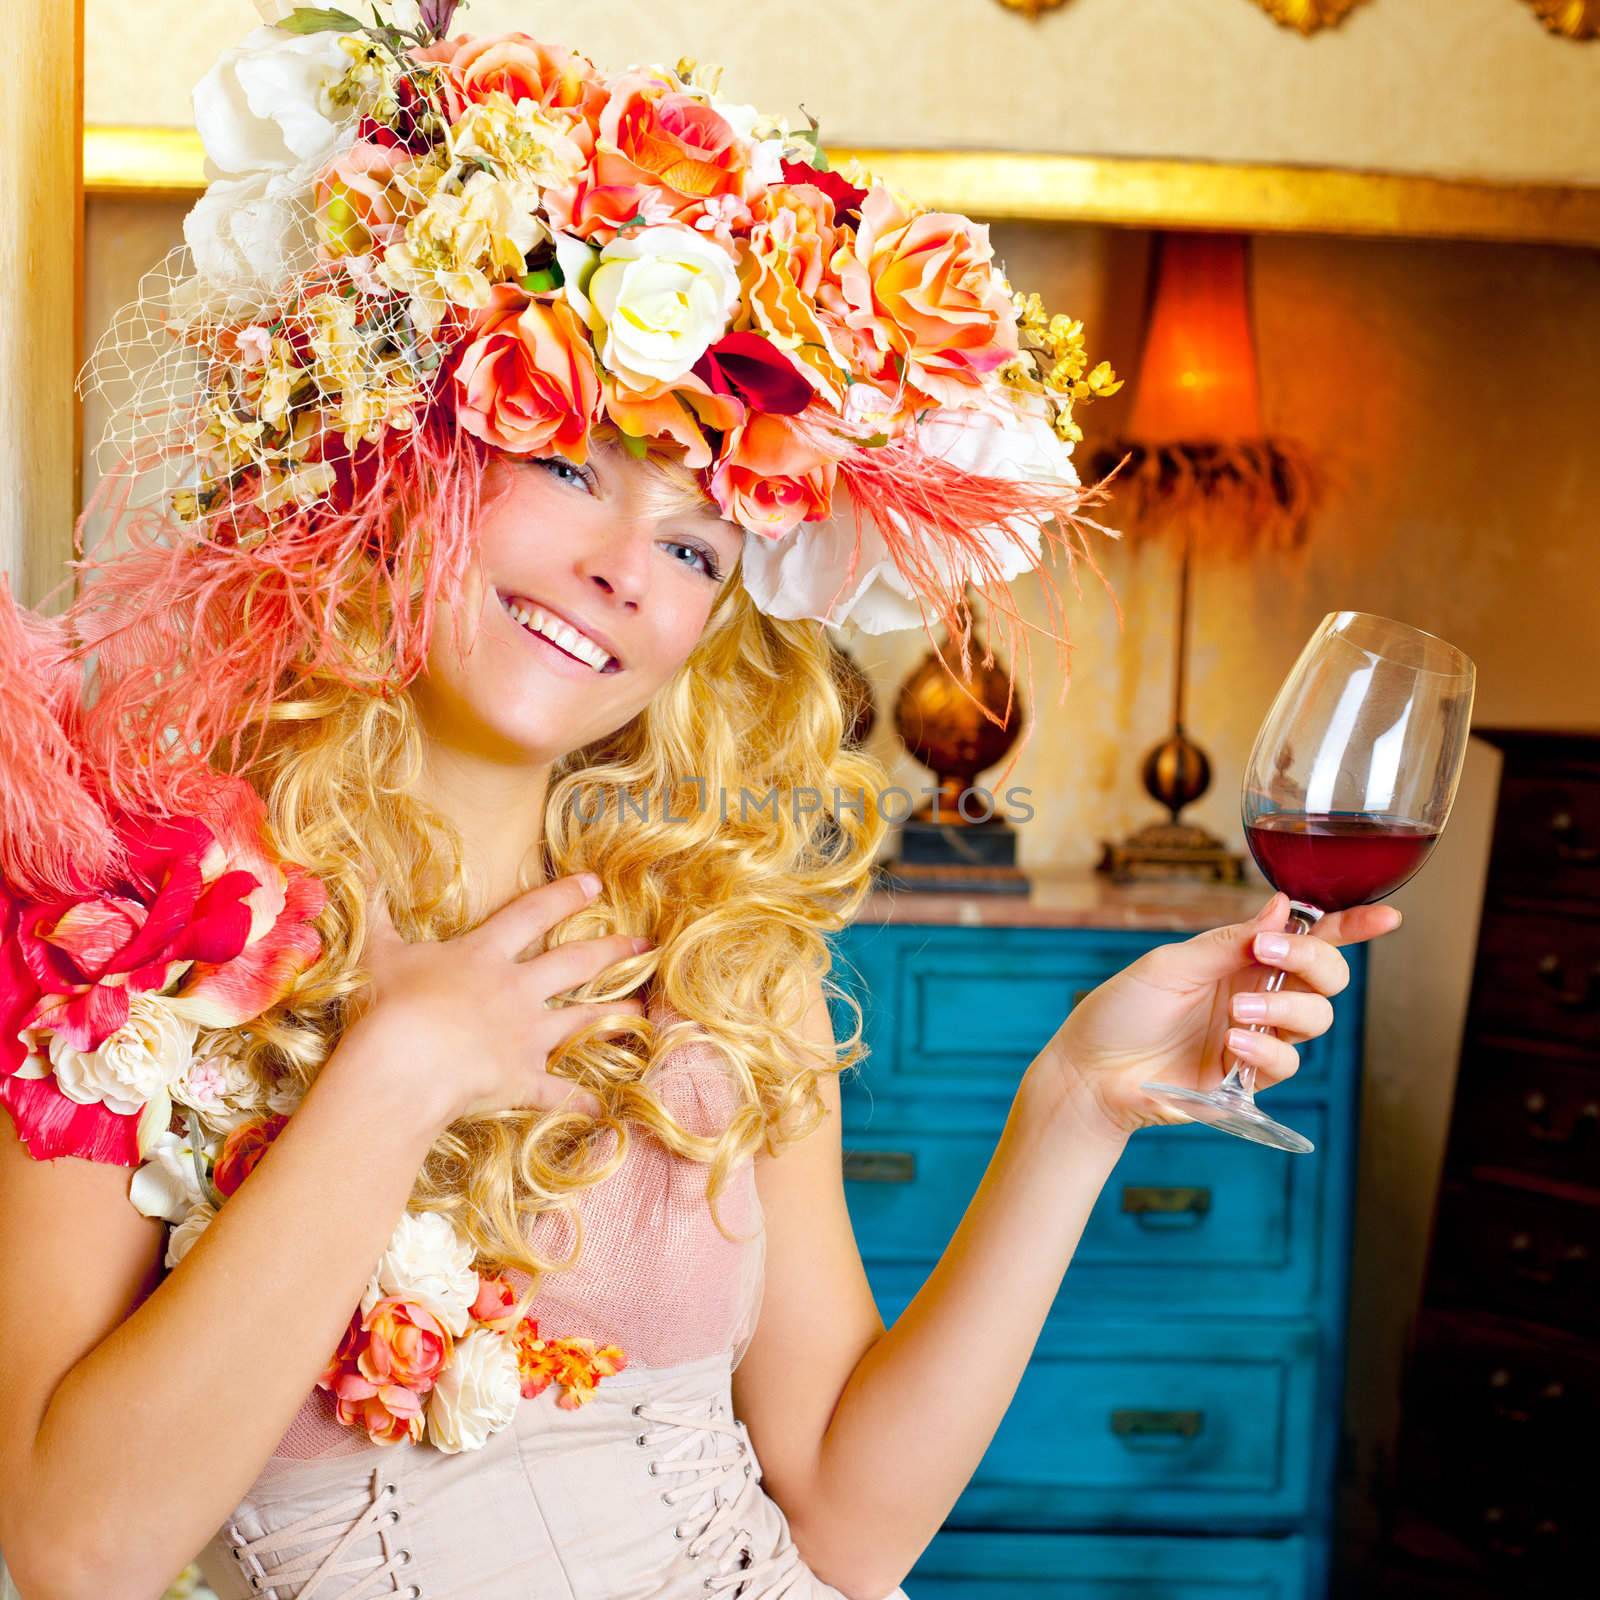 fashion baroque blond womand drinking red wine by lunamarina